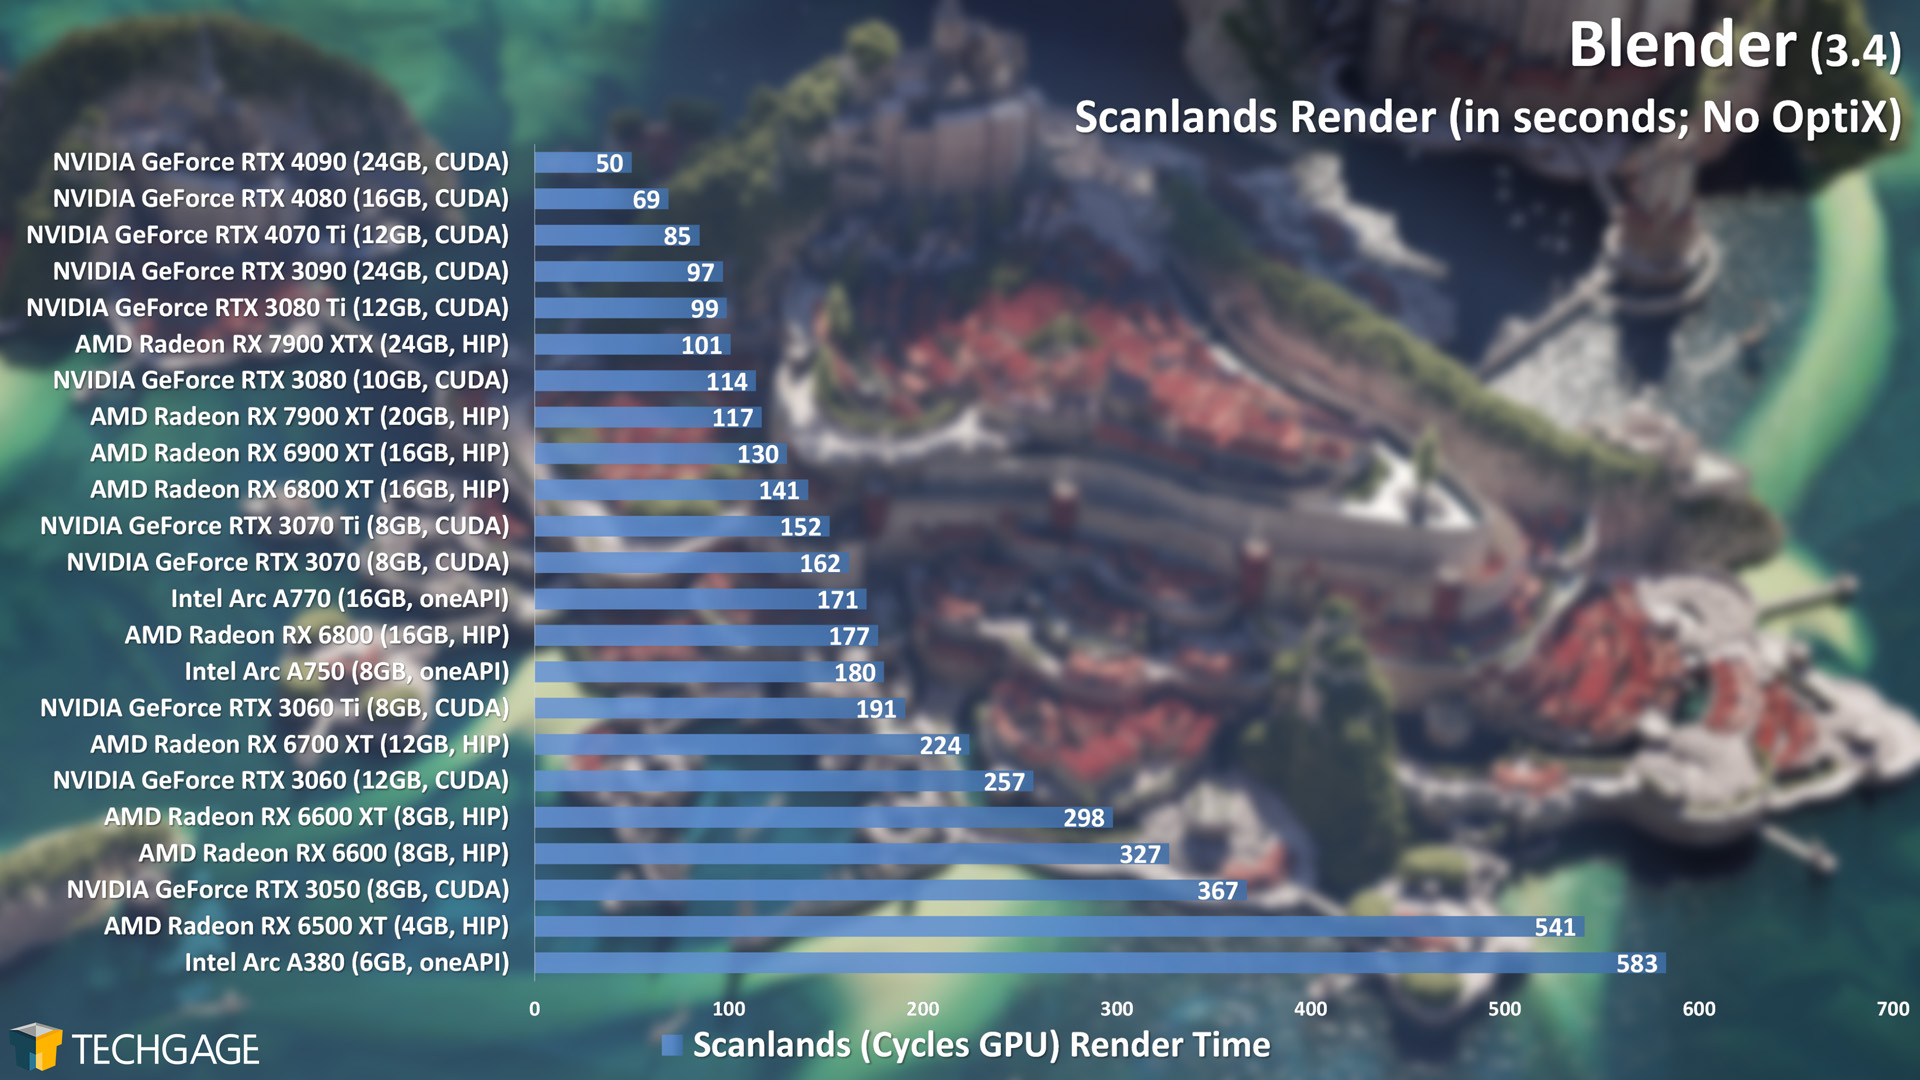 Blender - Cycles GPU Render Performance (Scanlands) (No OptiX)